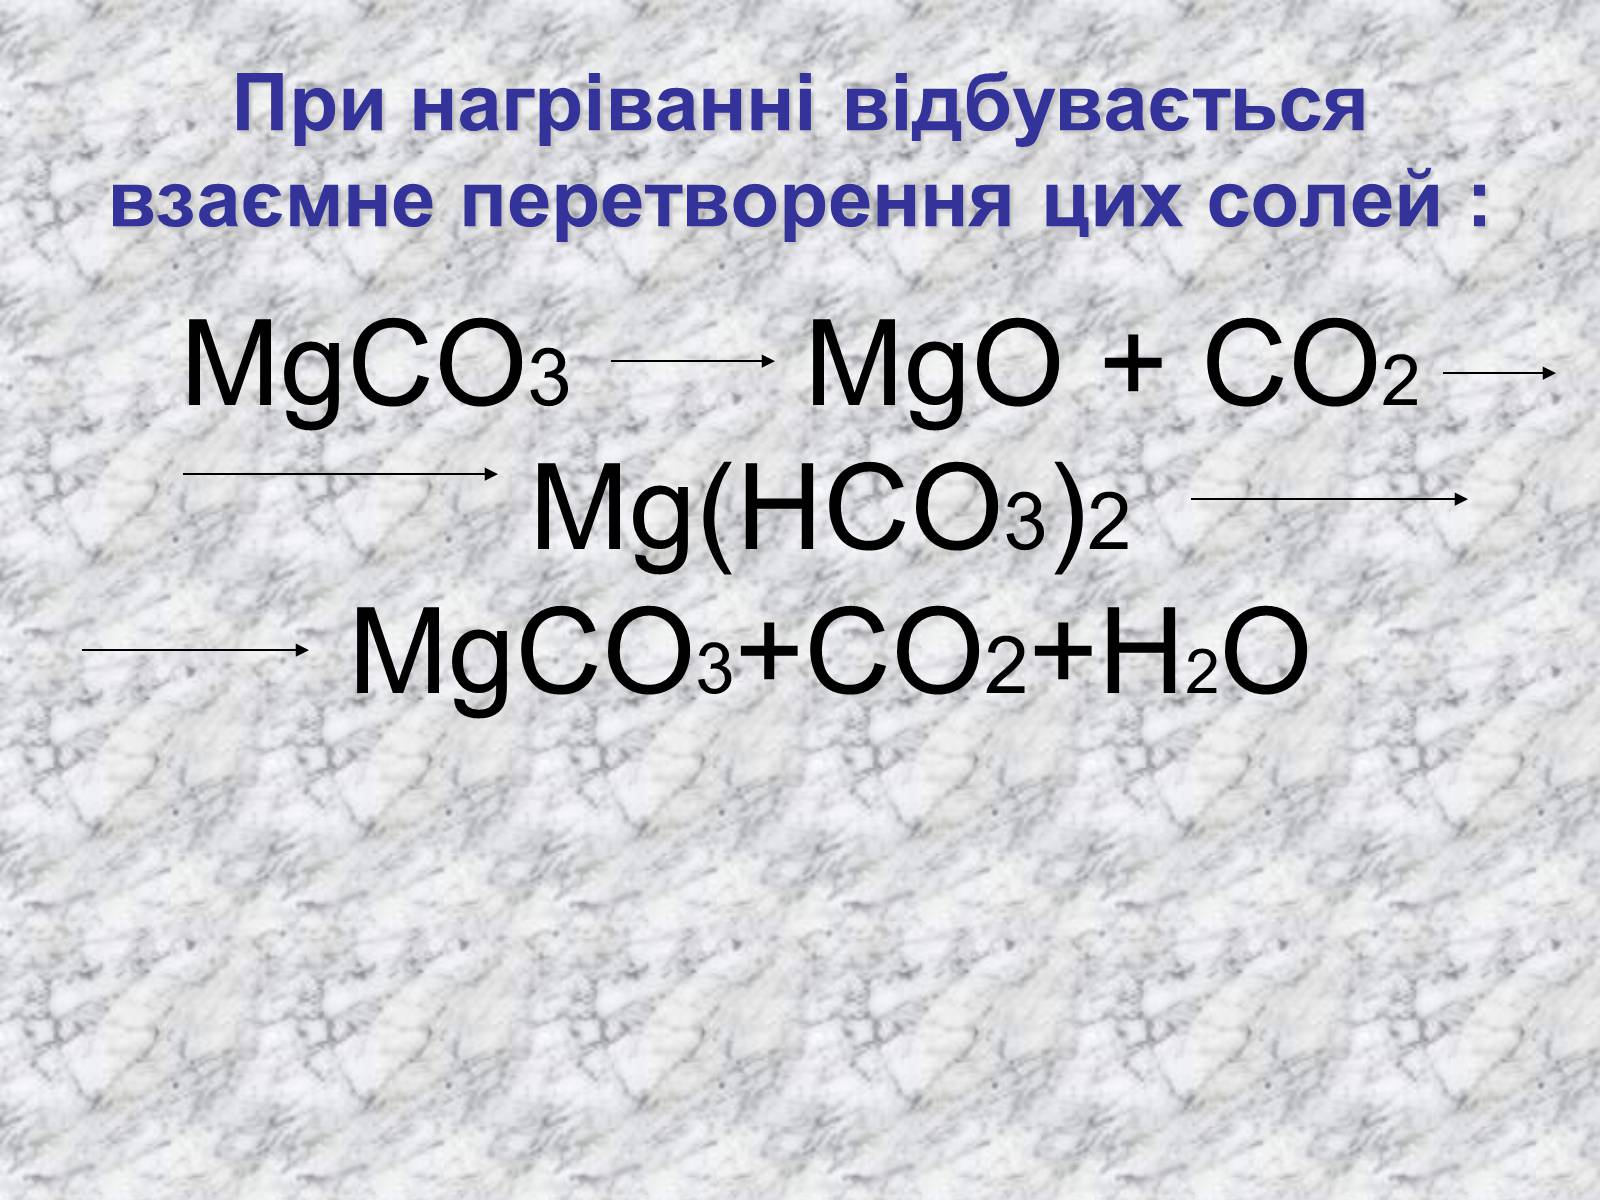 Mgco3 реагирует с азотной кислотой. MG(hco3)2 = mgco3 + co2 + h2o. MGO+co2. Mgco3+co2+h2o. Mgco3+co2 раствор.